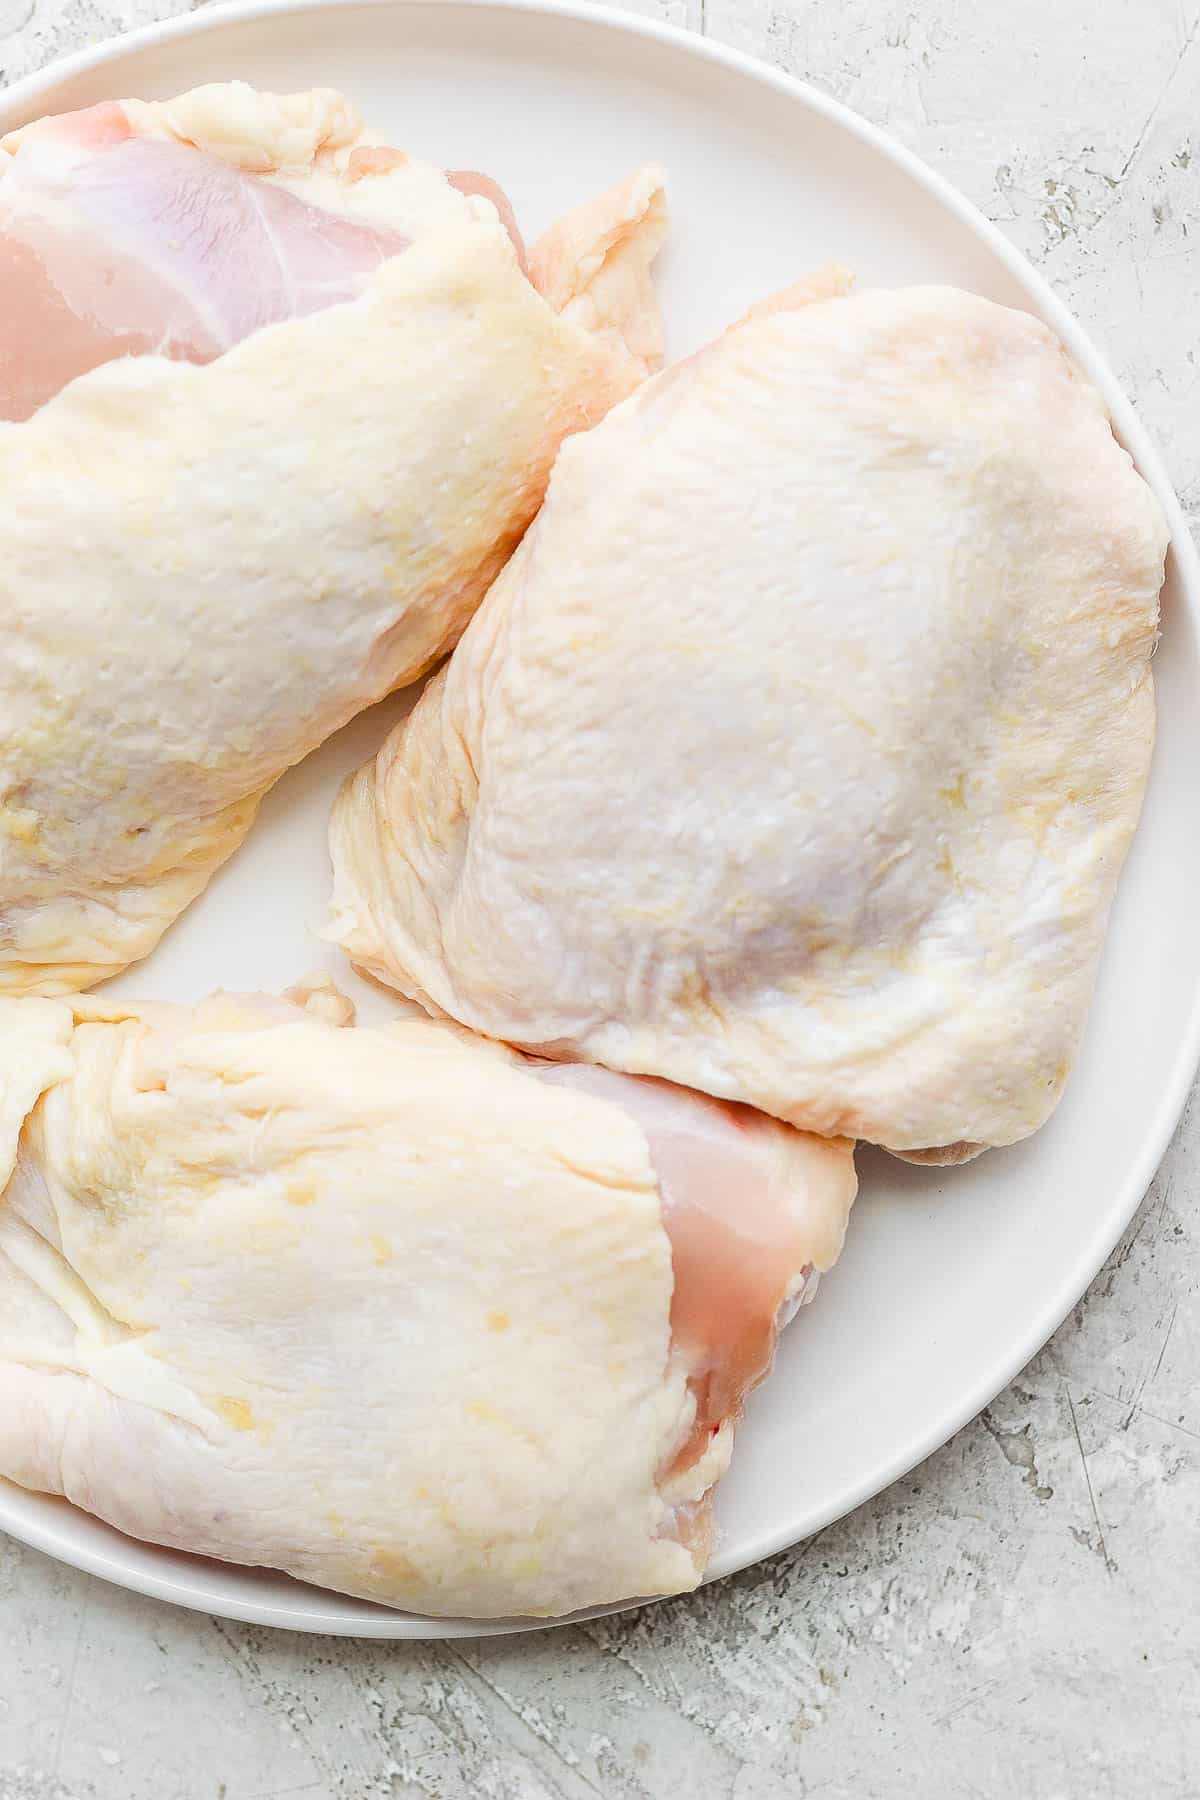 Three bone-in, skin-on chicken thighs on a white plate.